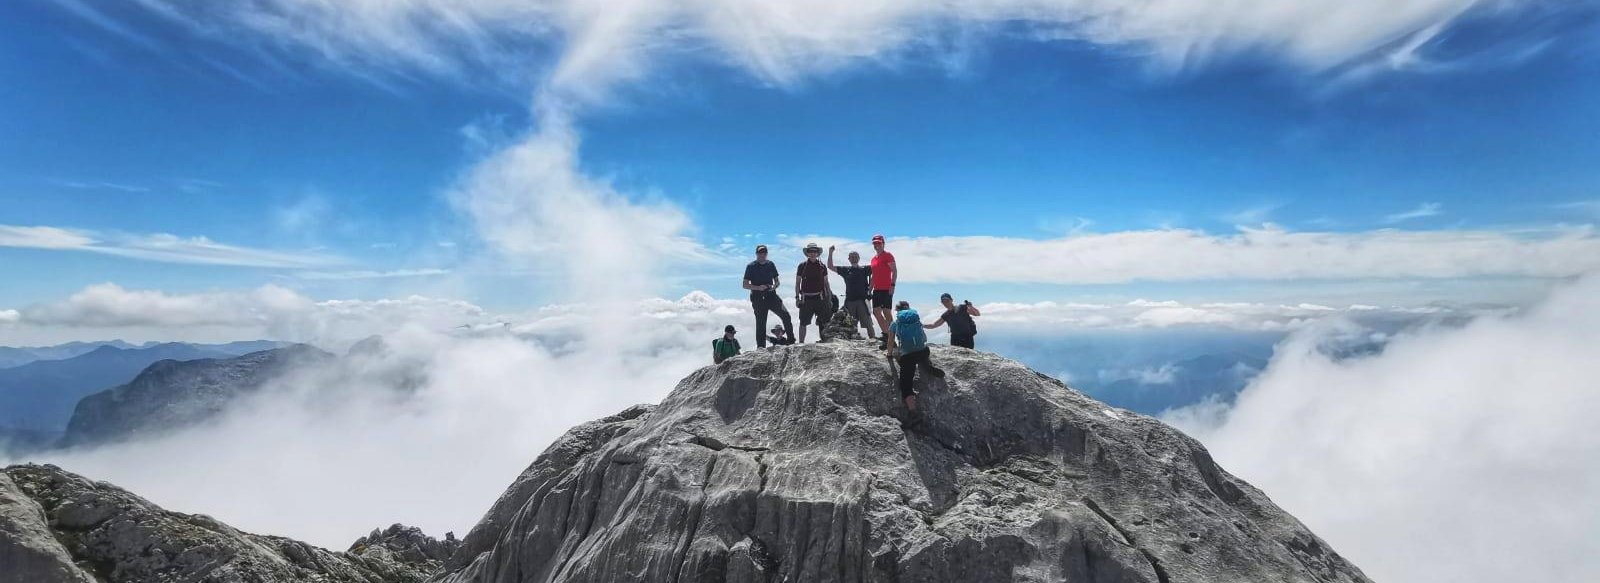 6 reasons to go trekking in the Picos de Europa